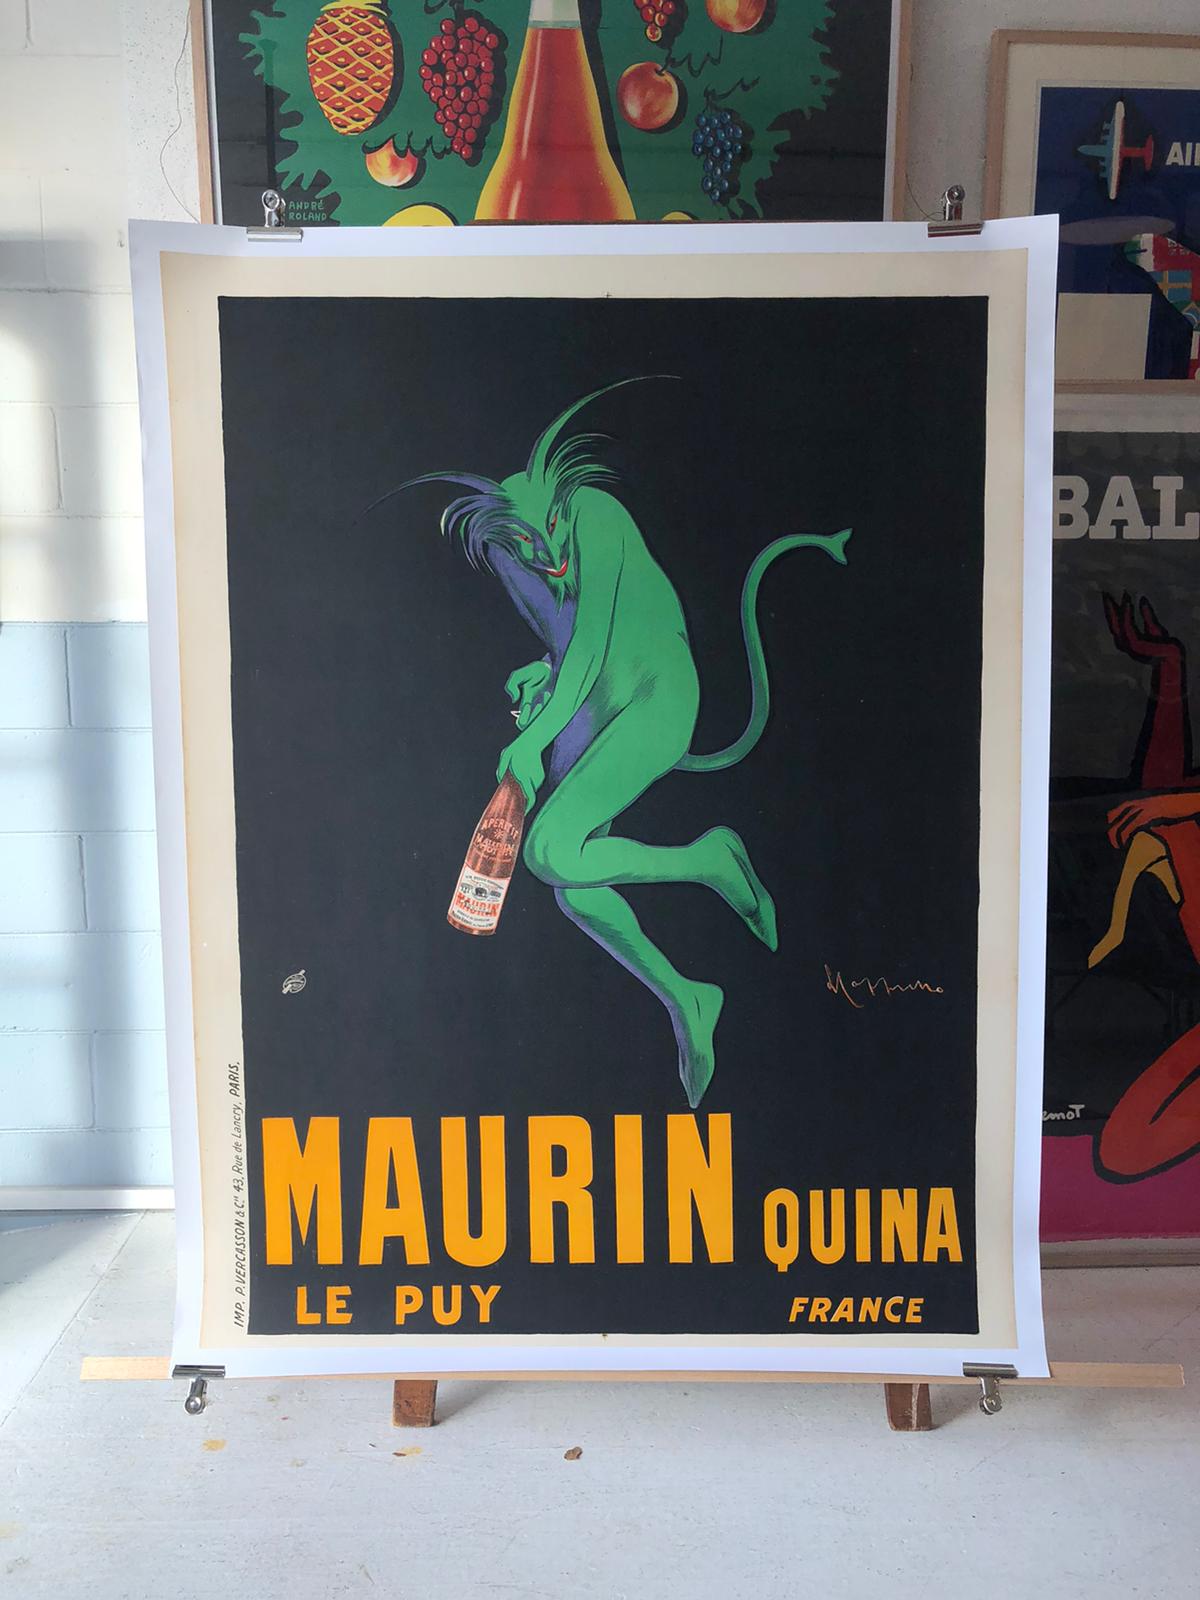 Maurin Quina by Cappiello